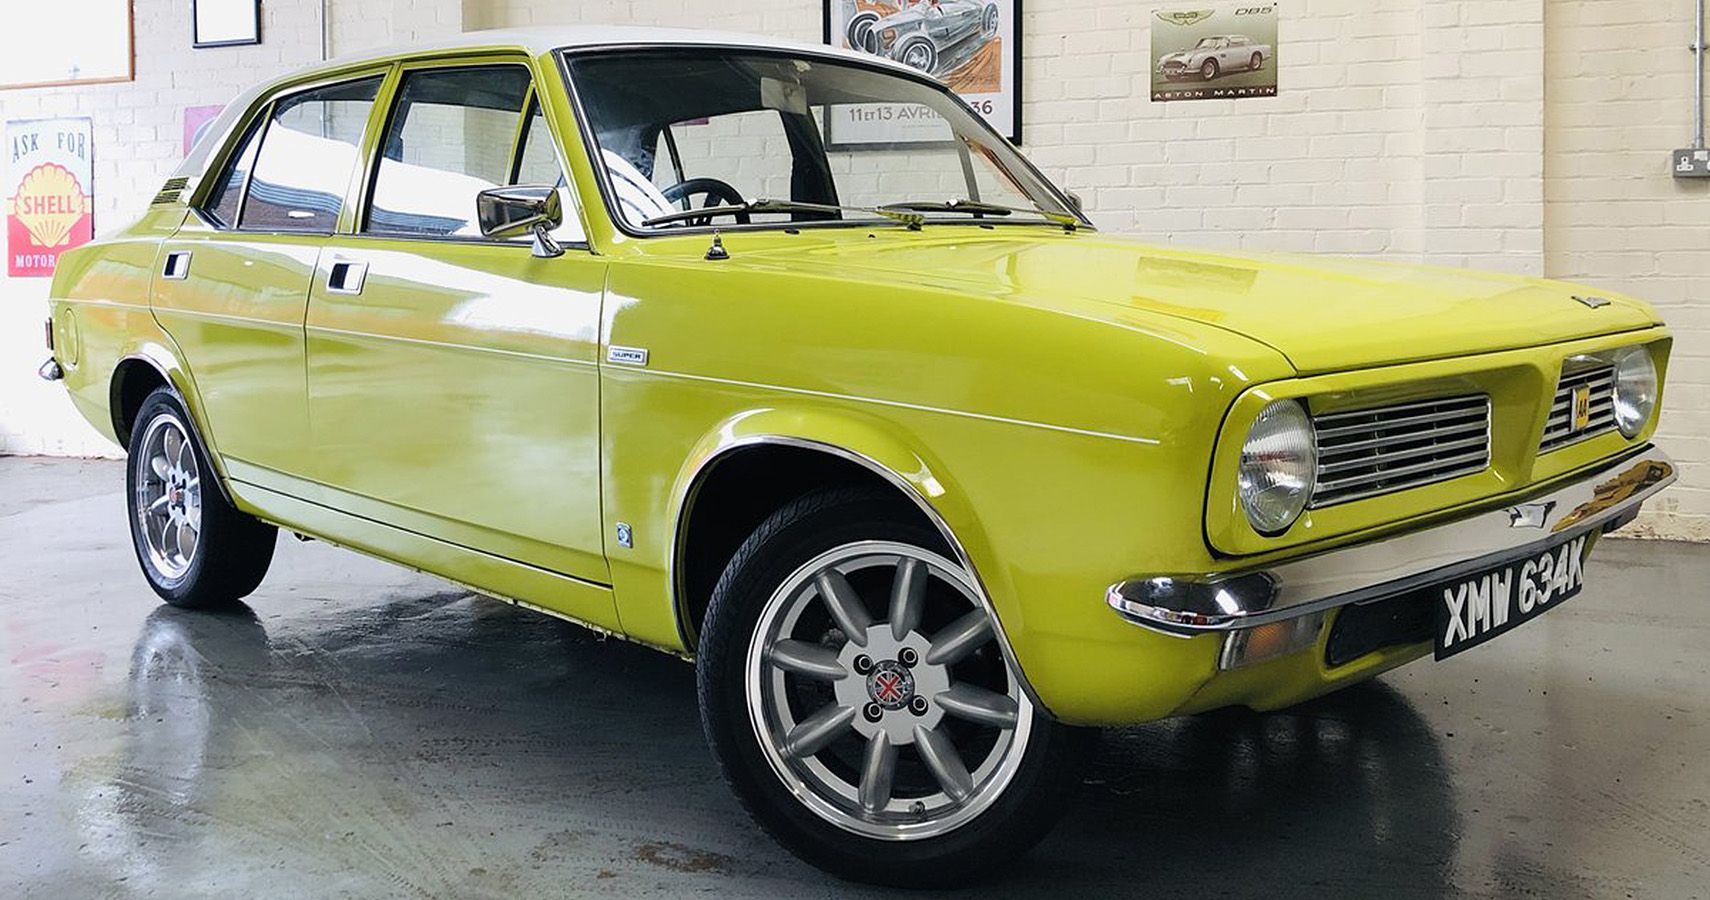 1971-1980 Morris Marina: A Bad Car That Sold Well